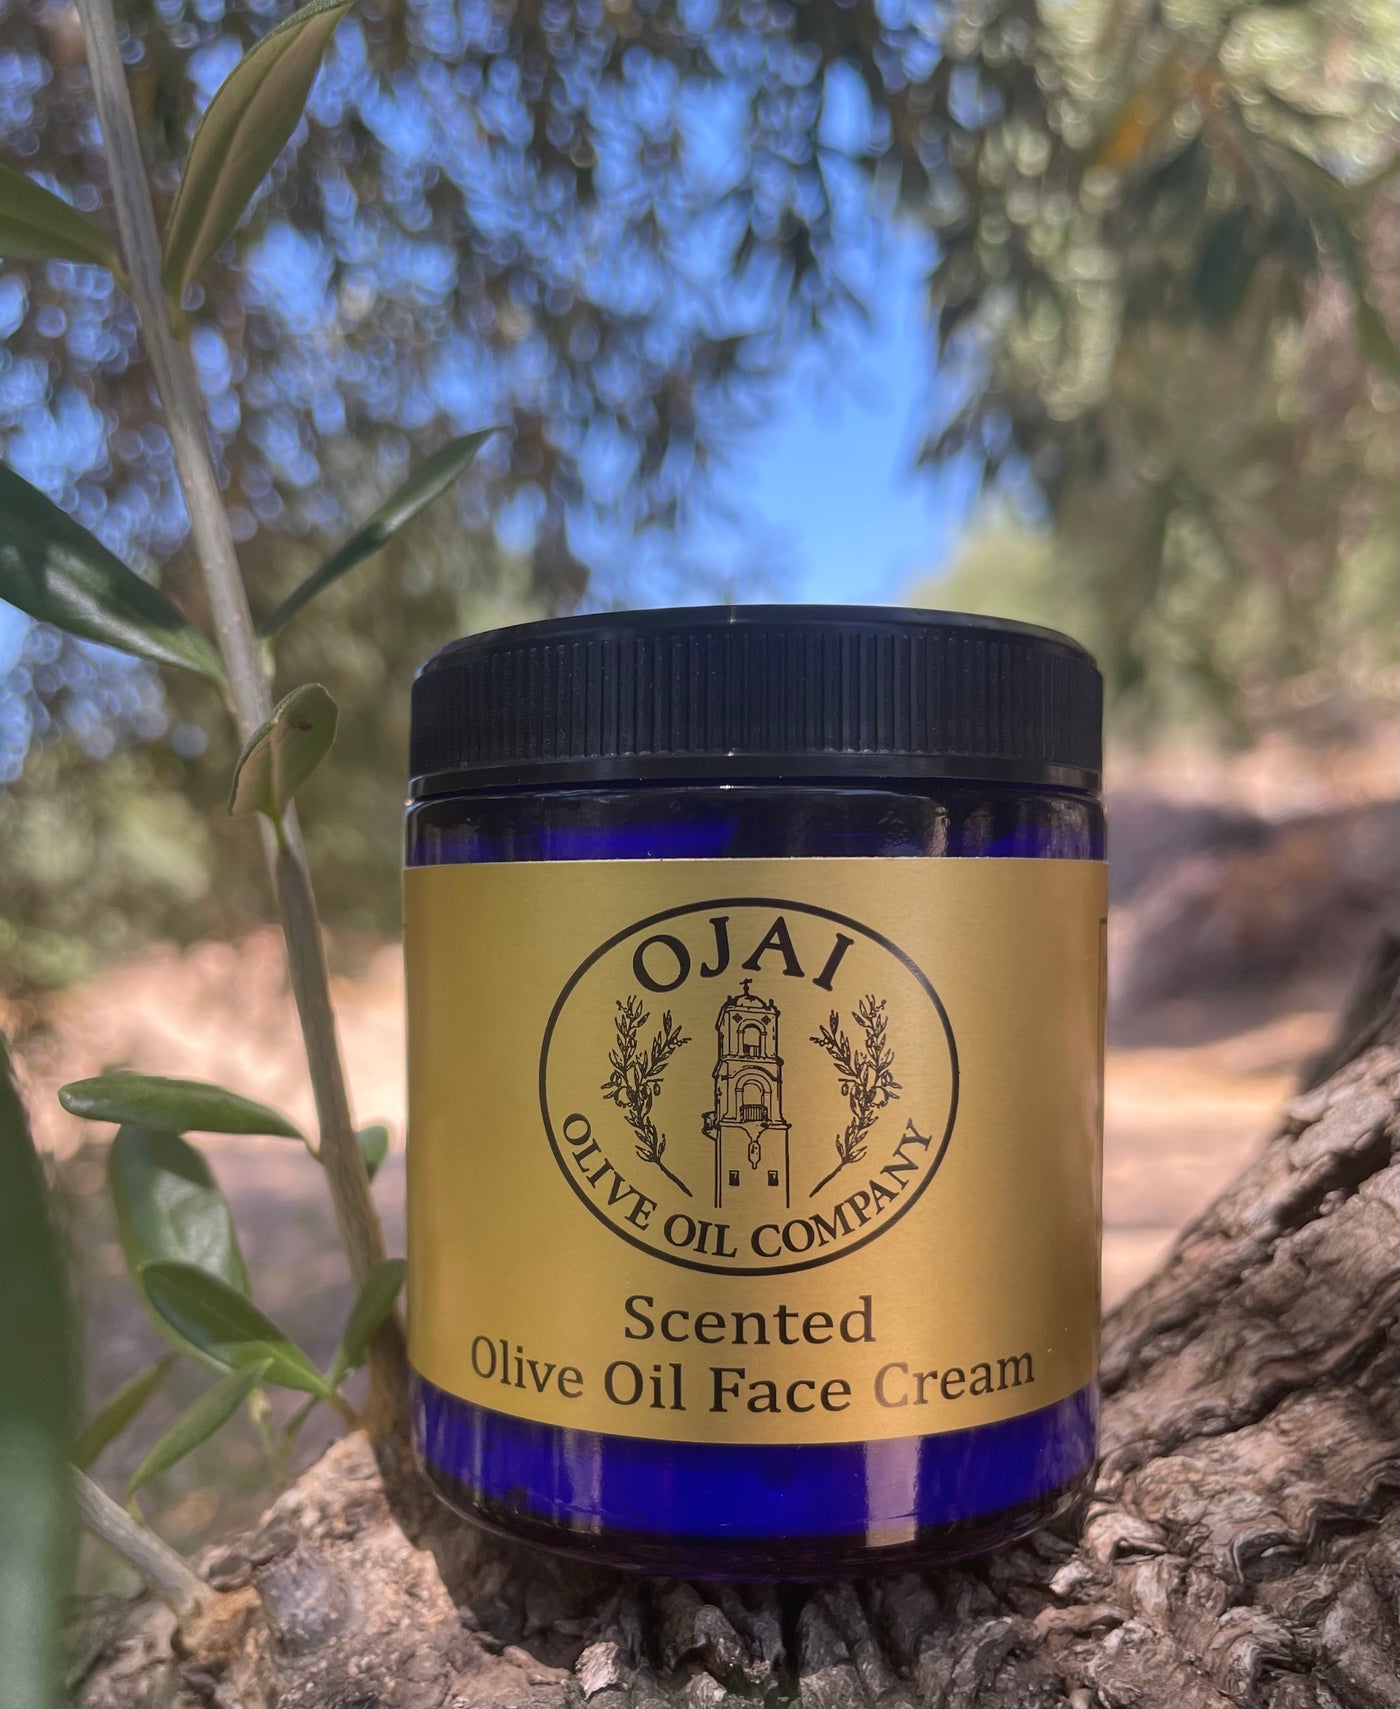 Scented Olive Oil Face Cream